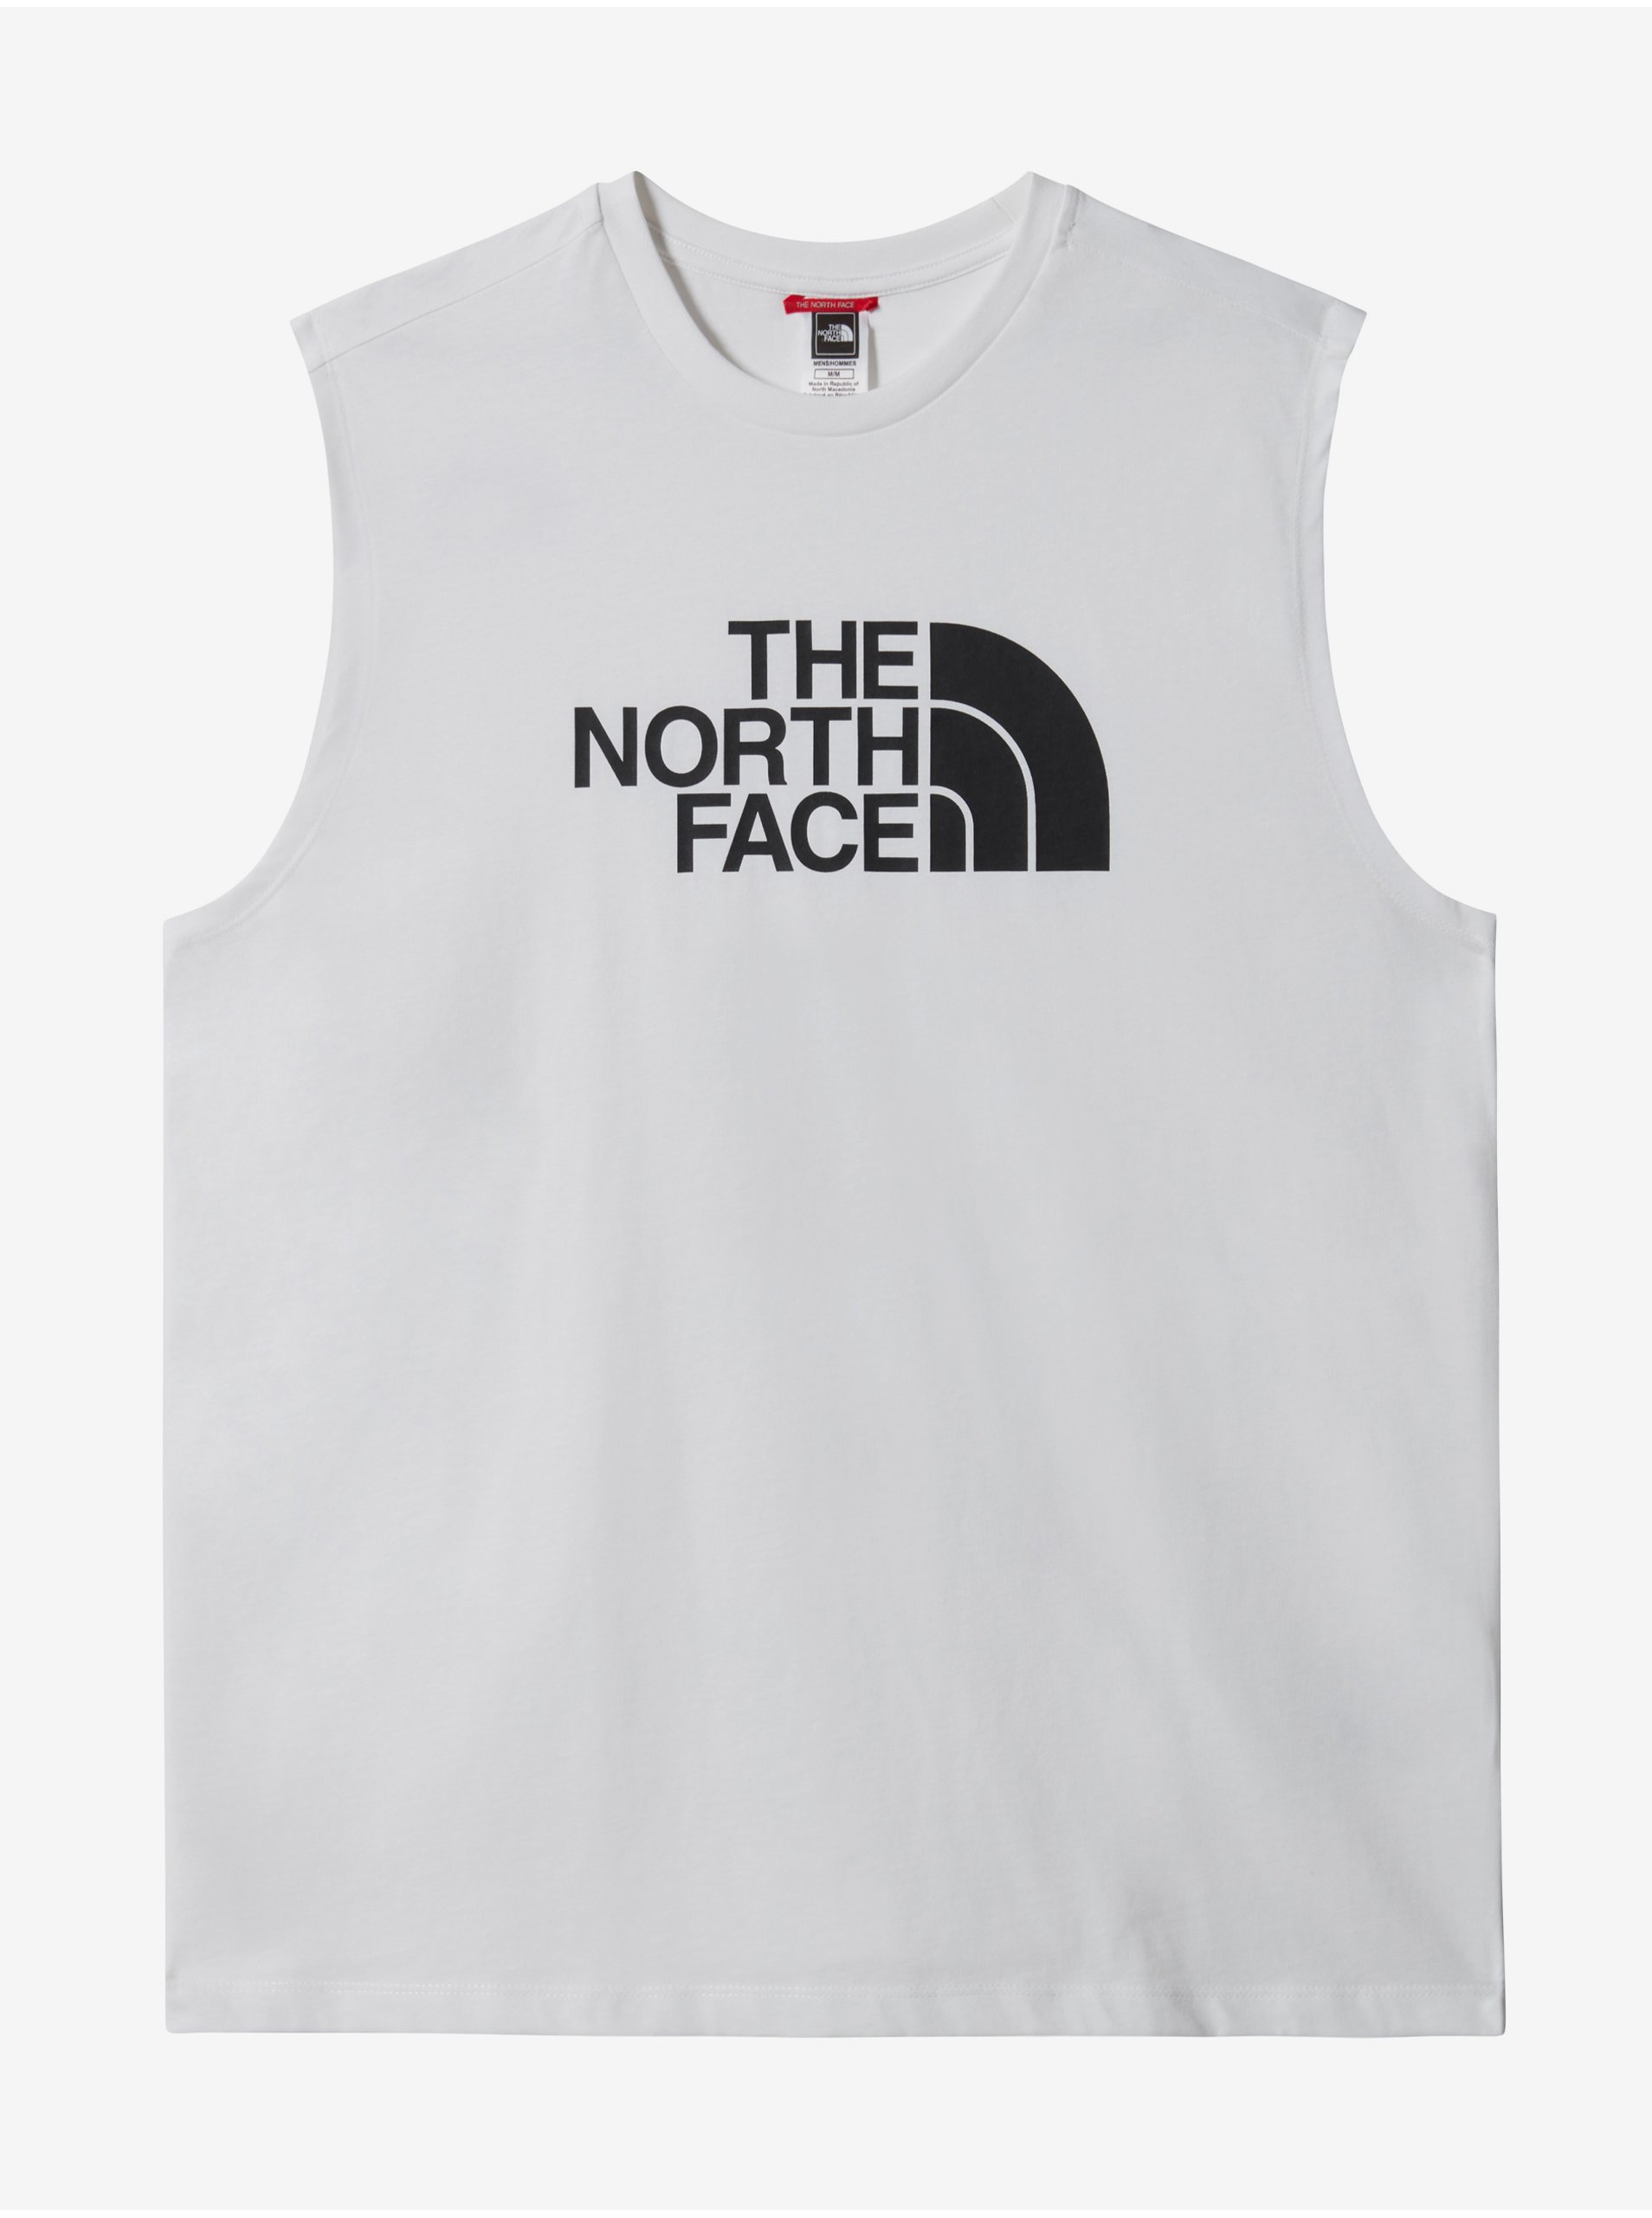 Lacno Tielka pre mužov The North Face - biela